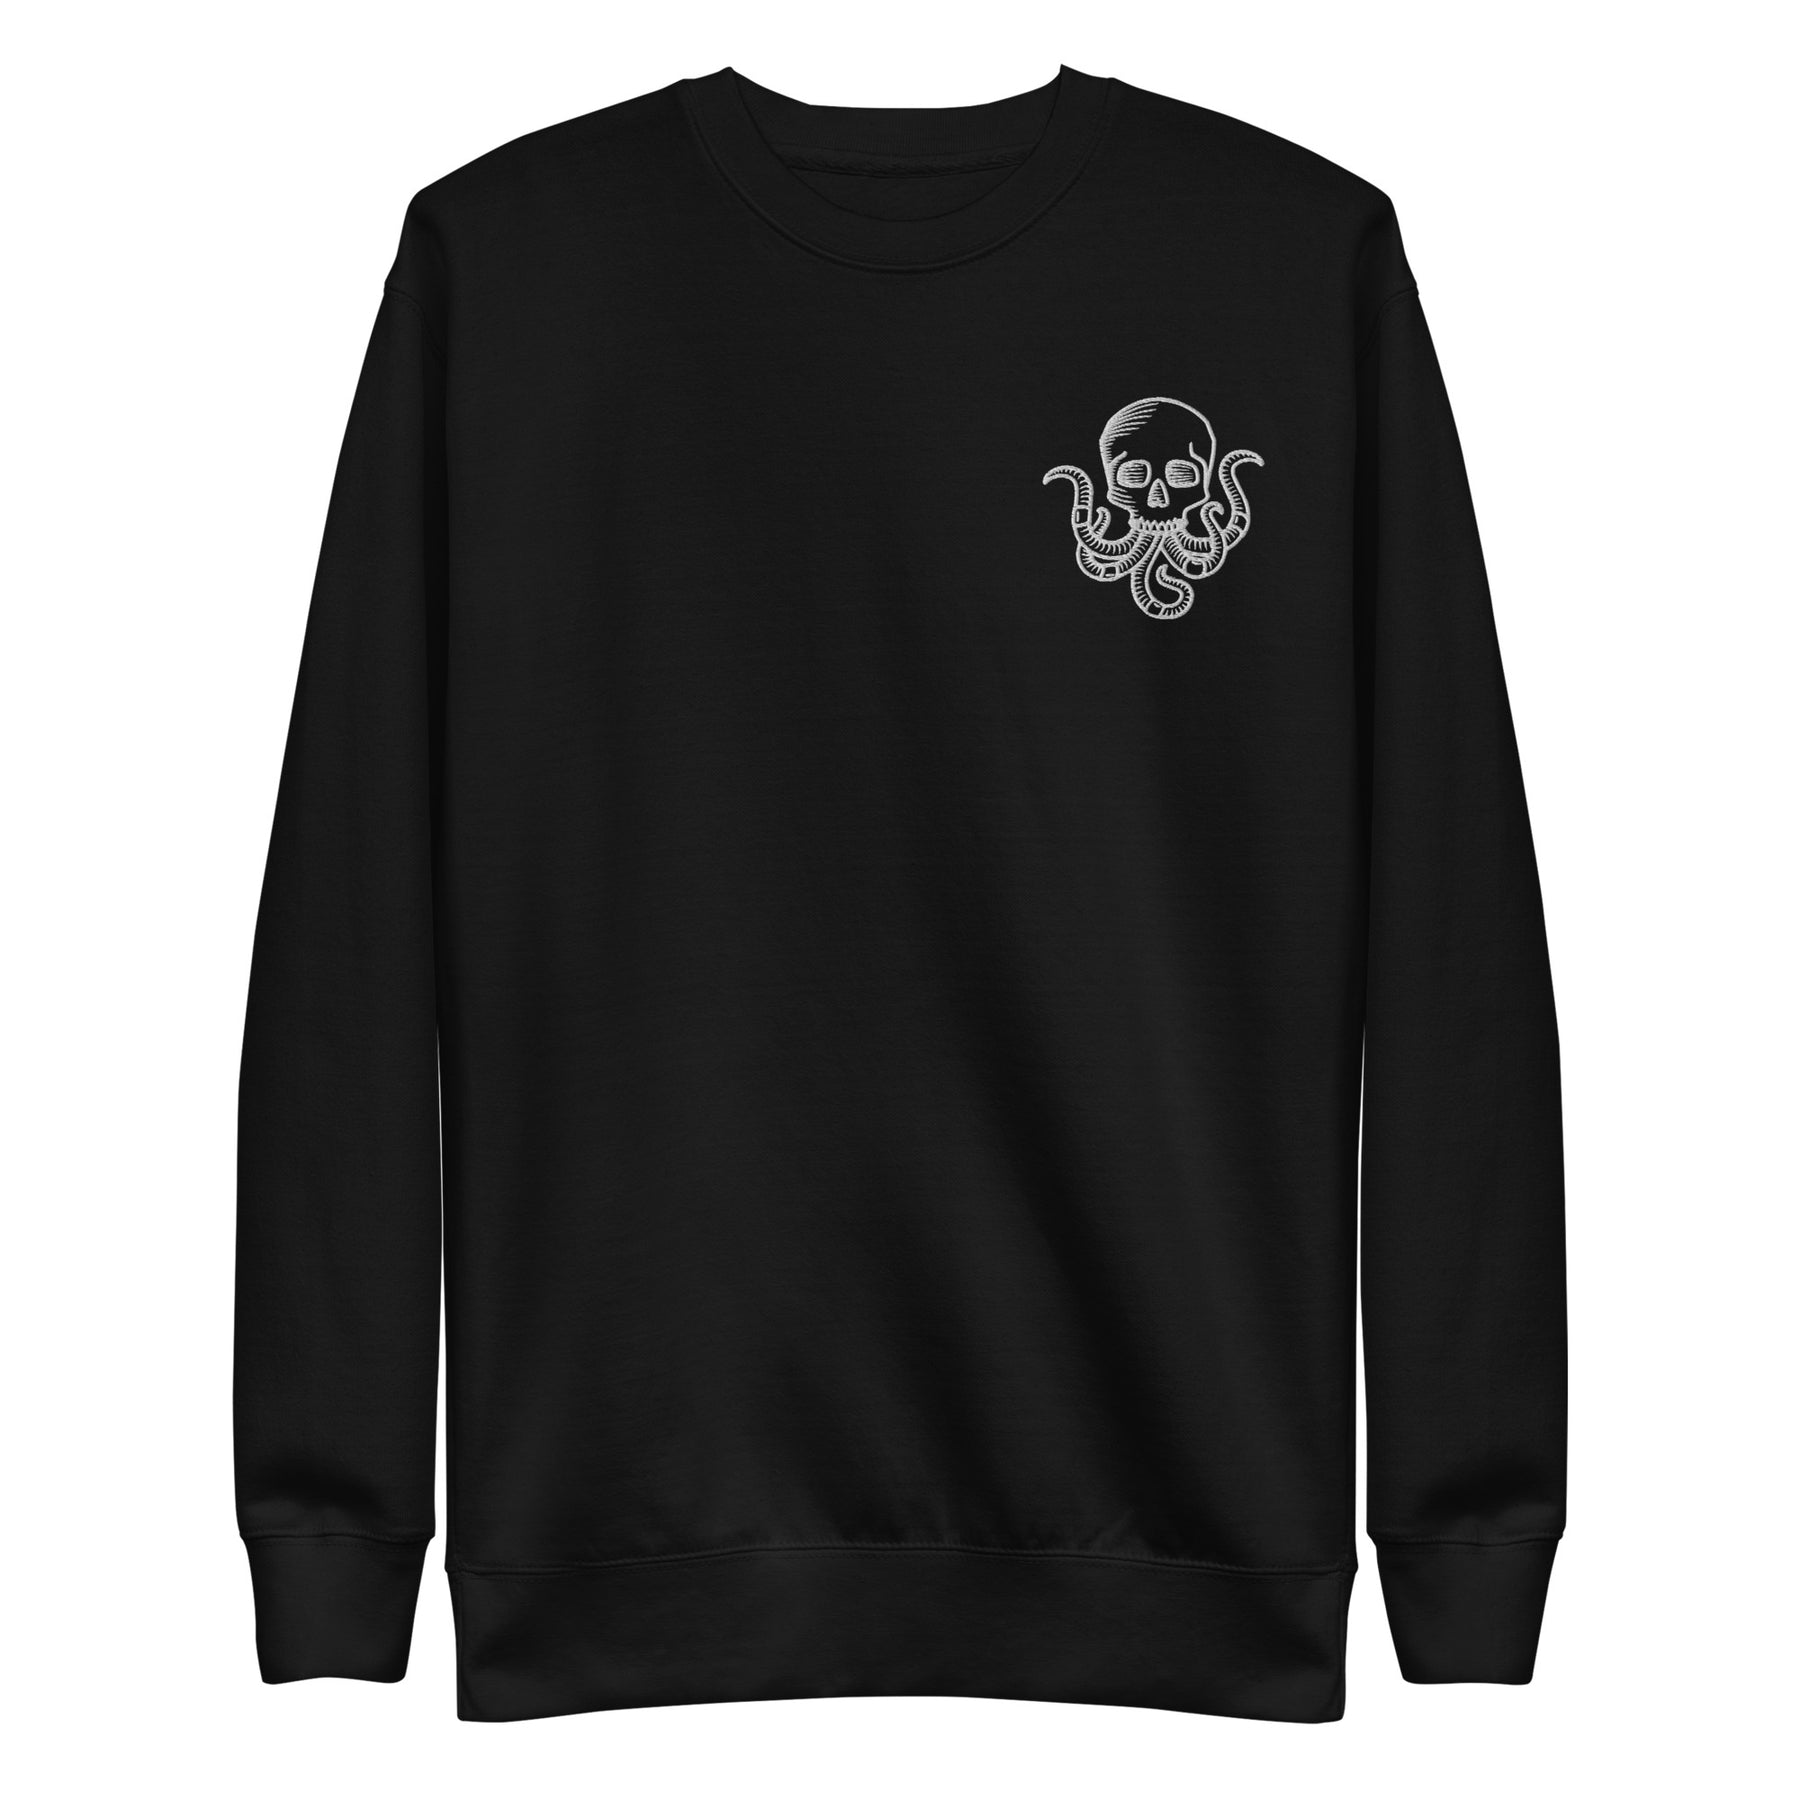 "Support Night Worms" Embroidered Logo Premium Sweatshirt